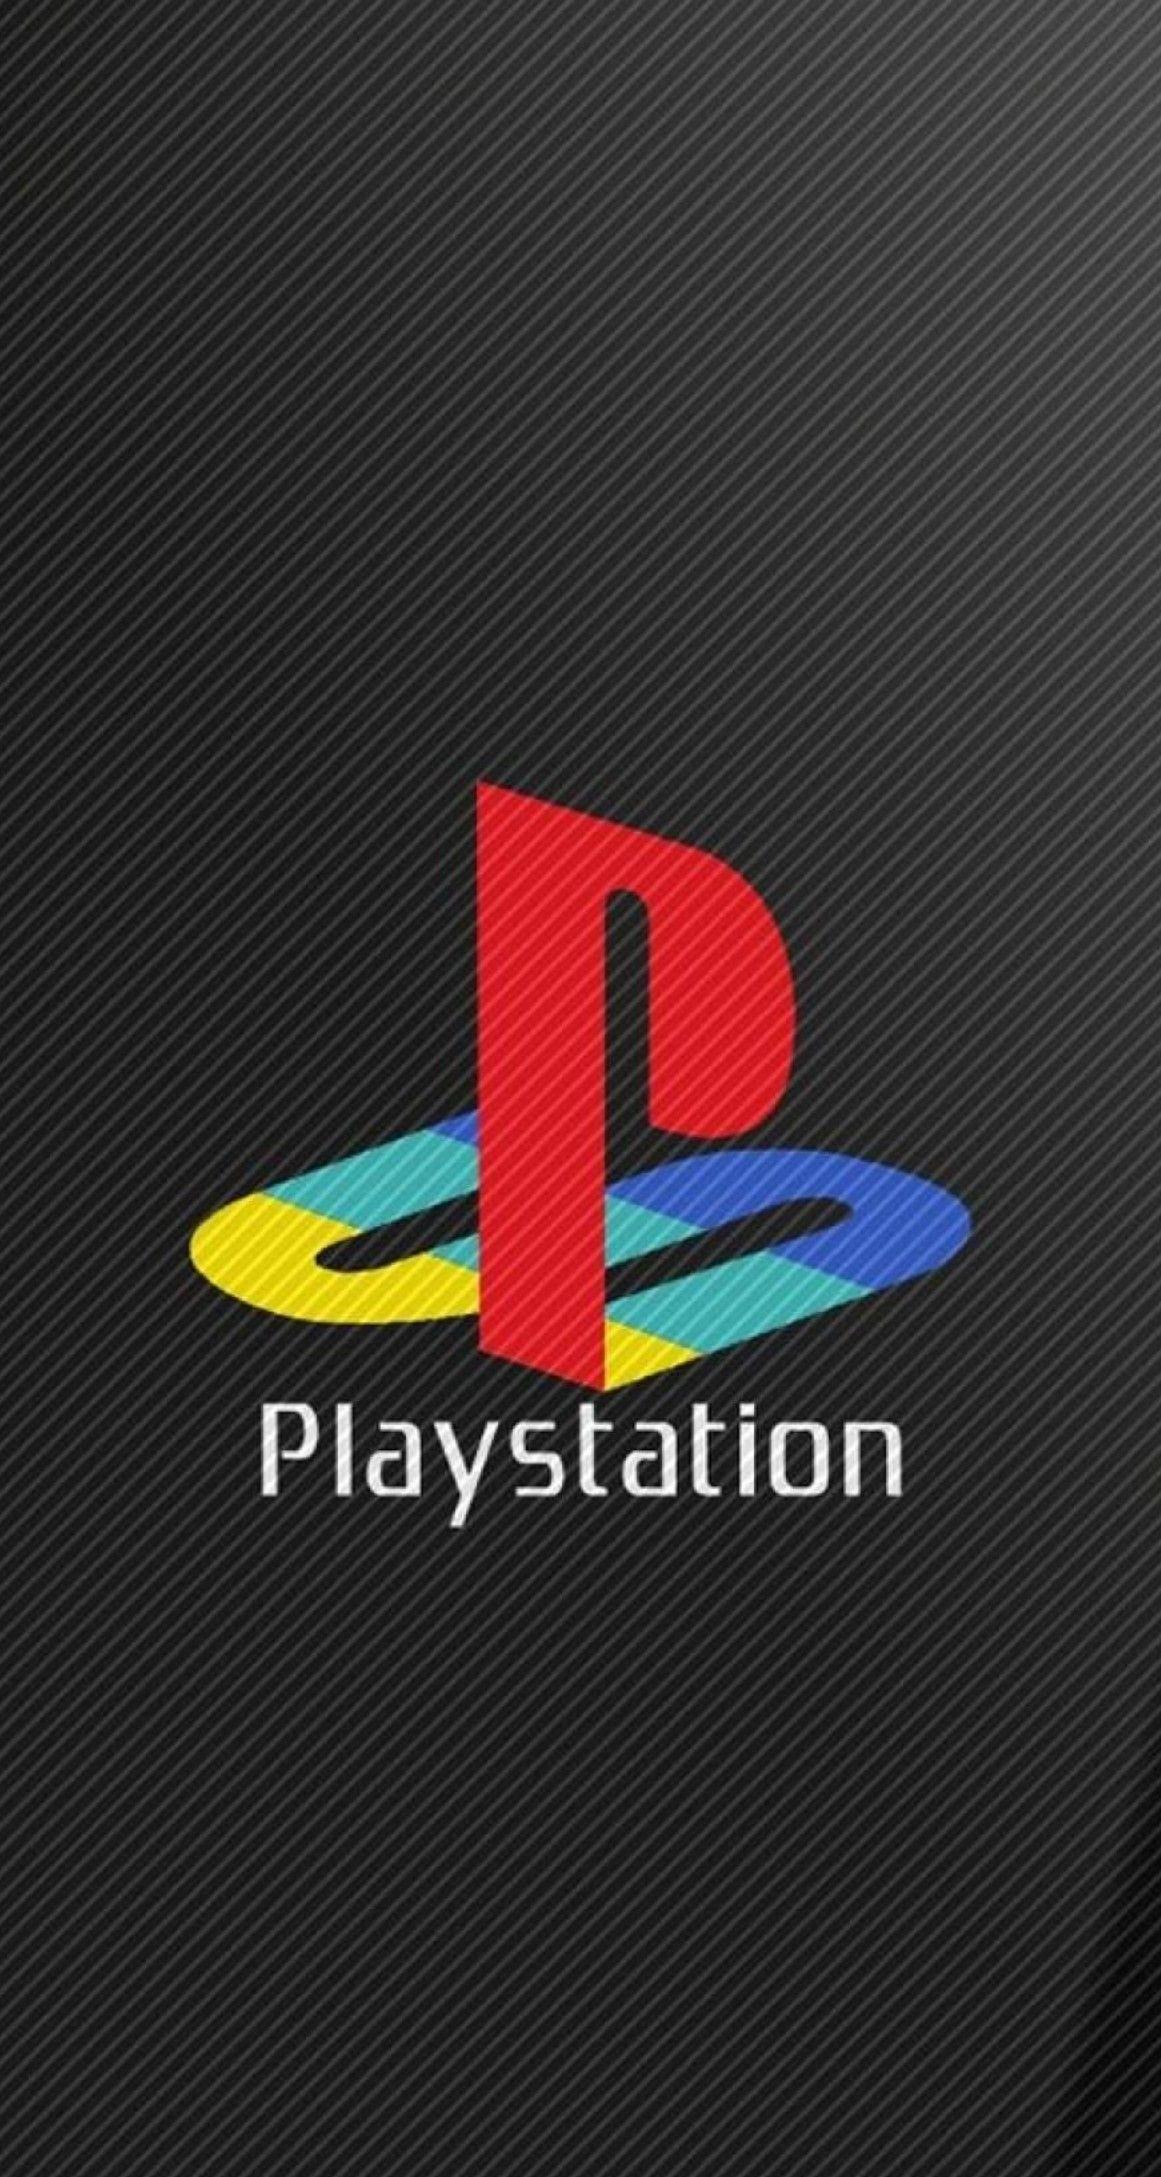 Play Station 1. GAMERS!!. PlayStation, Playstation games, Videogames